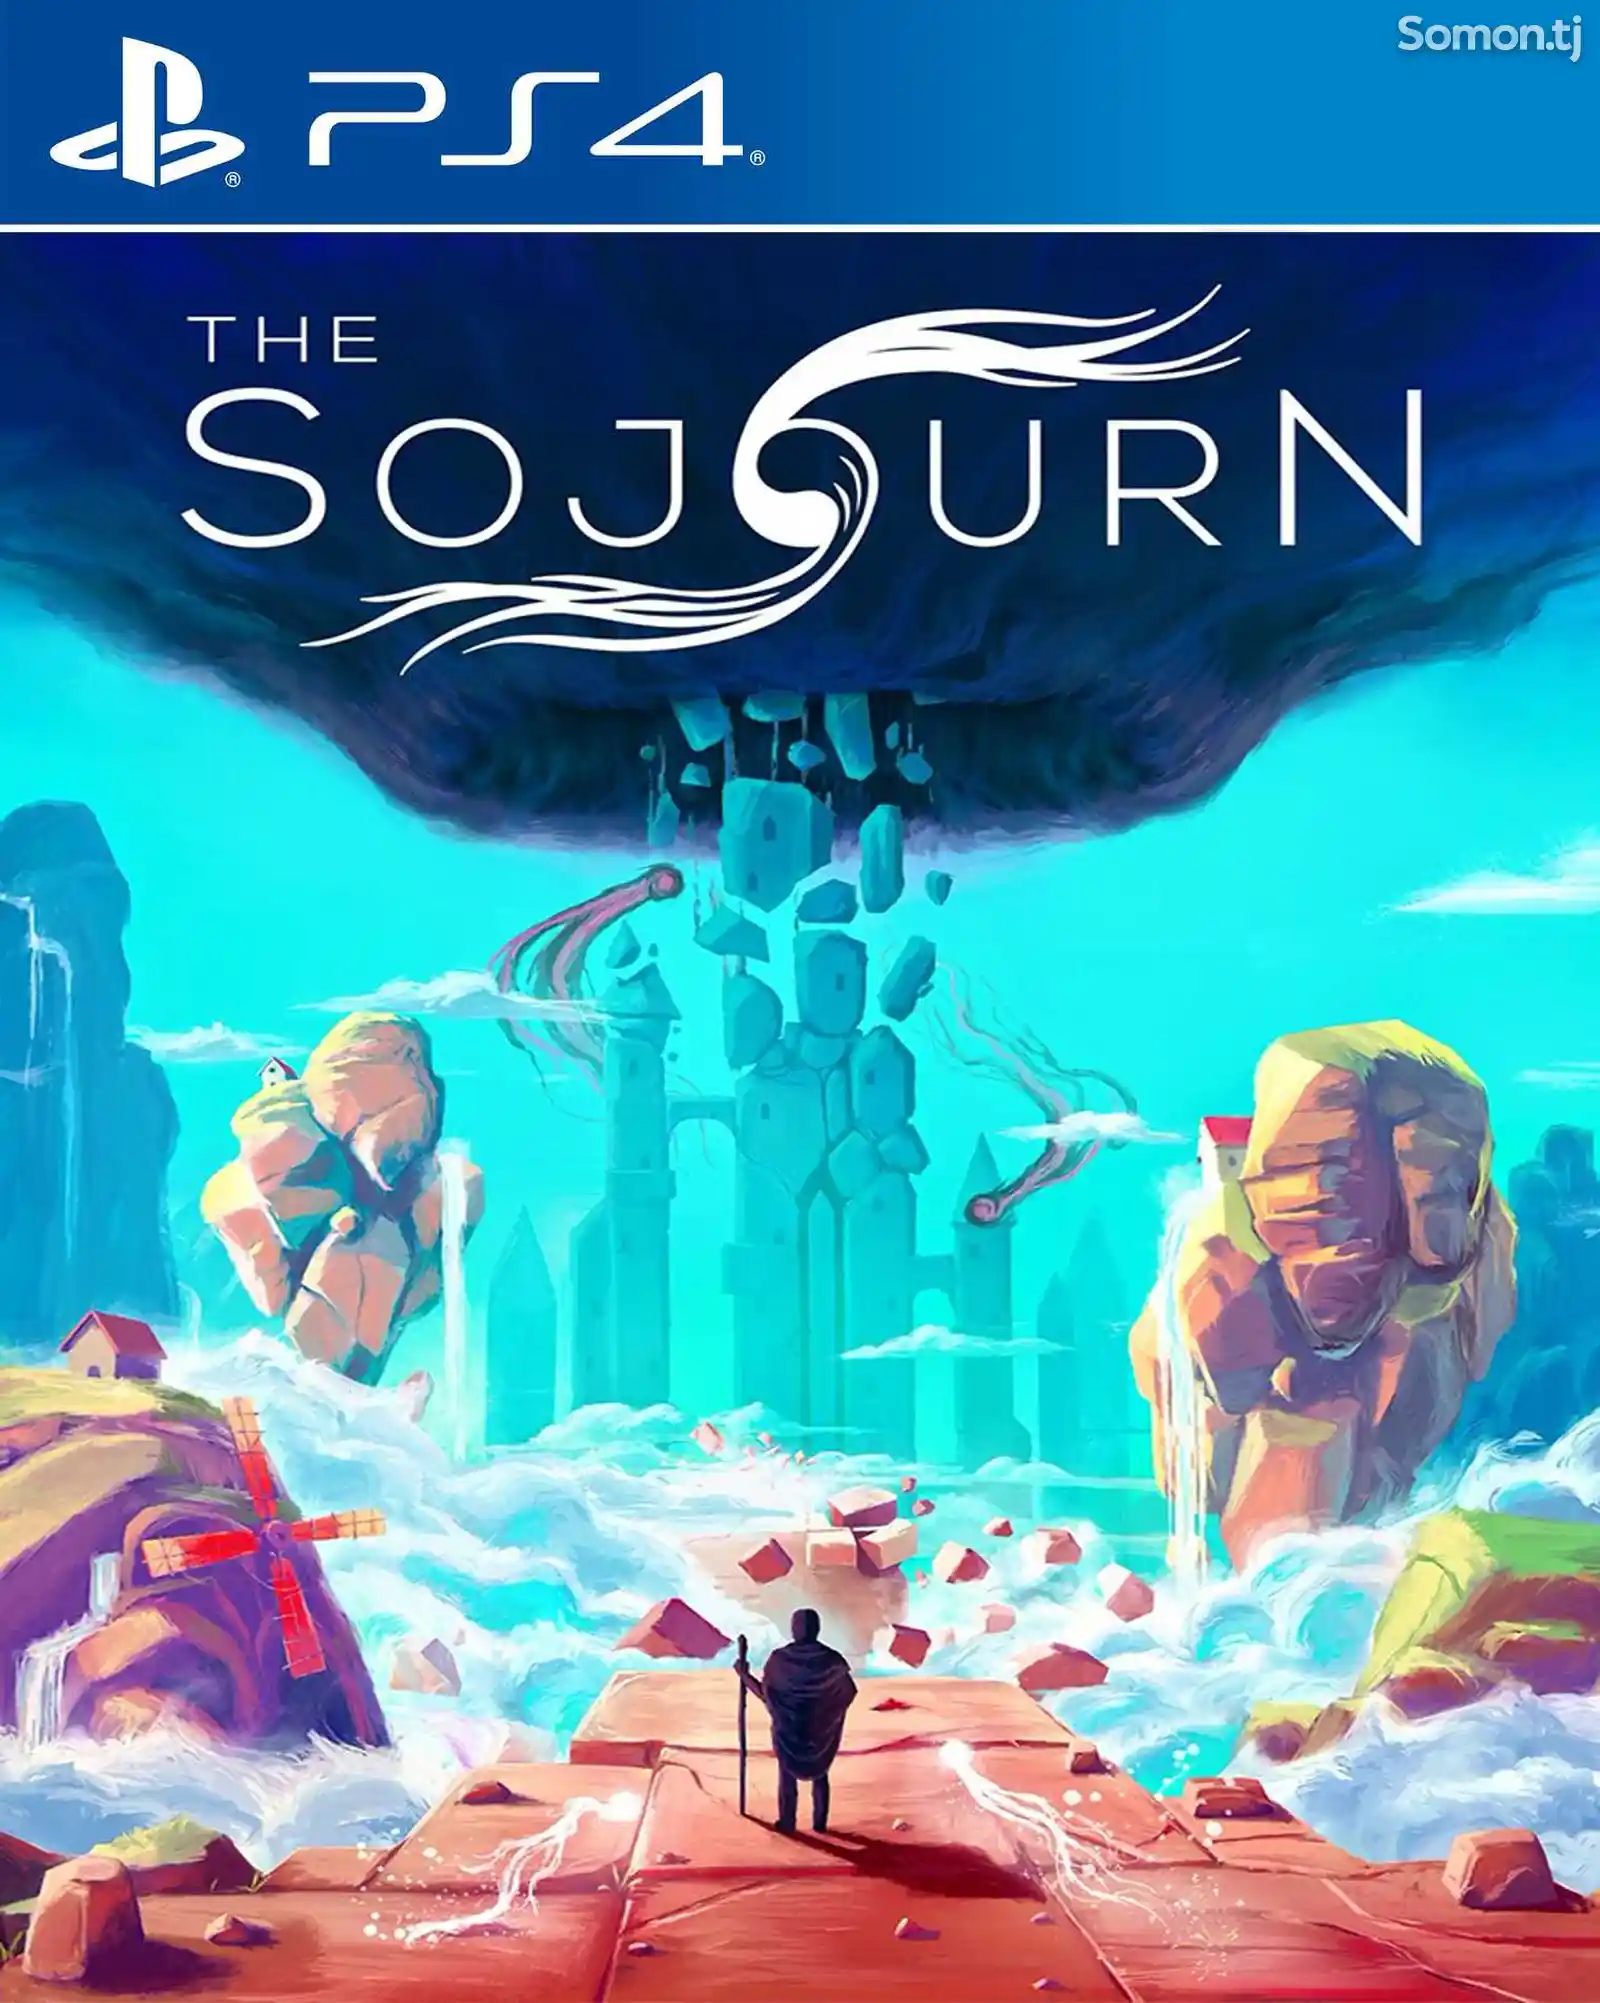 Игра The sojoun для PS-4 / 5.05 / 6.72 / 7.02 / 7.55 / 9.00 /-1